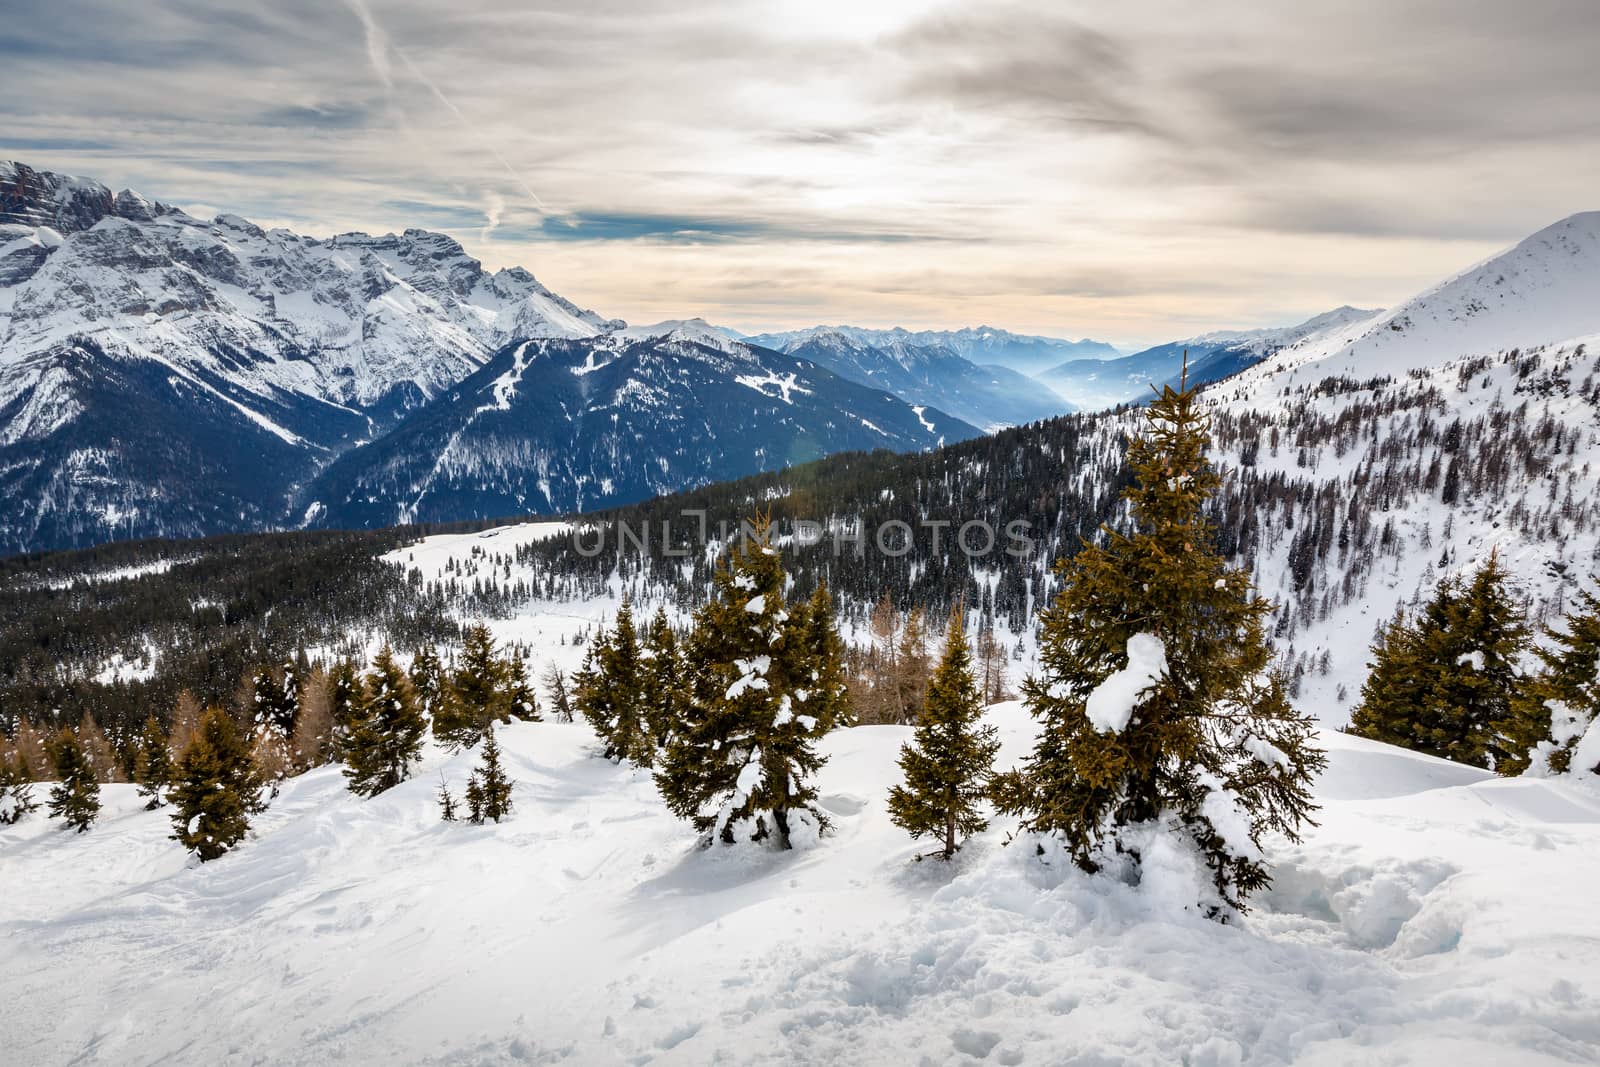 Madonna di Campiglio Ski Resort, Italian Alps, Italy by anshar